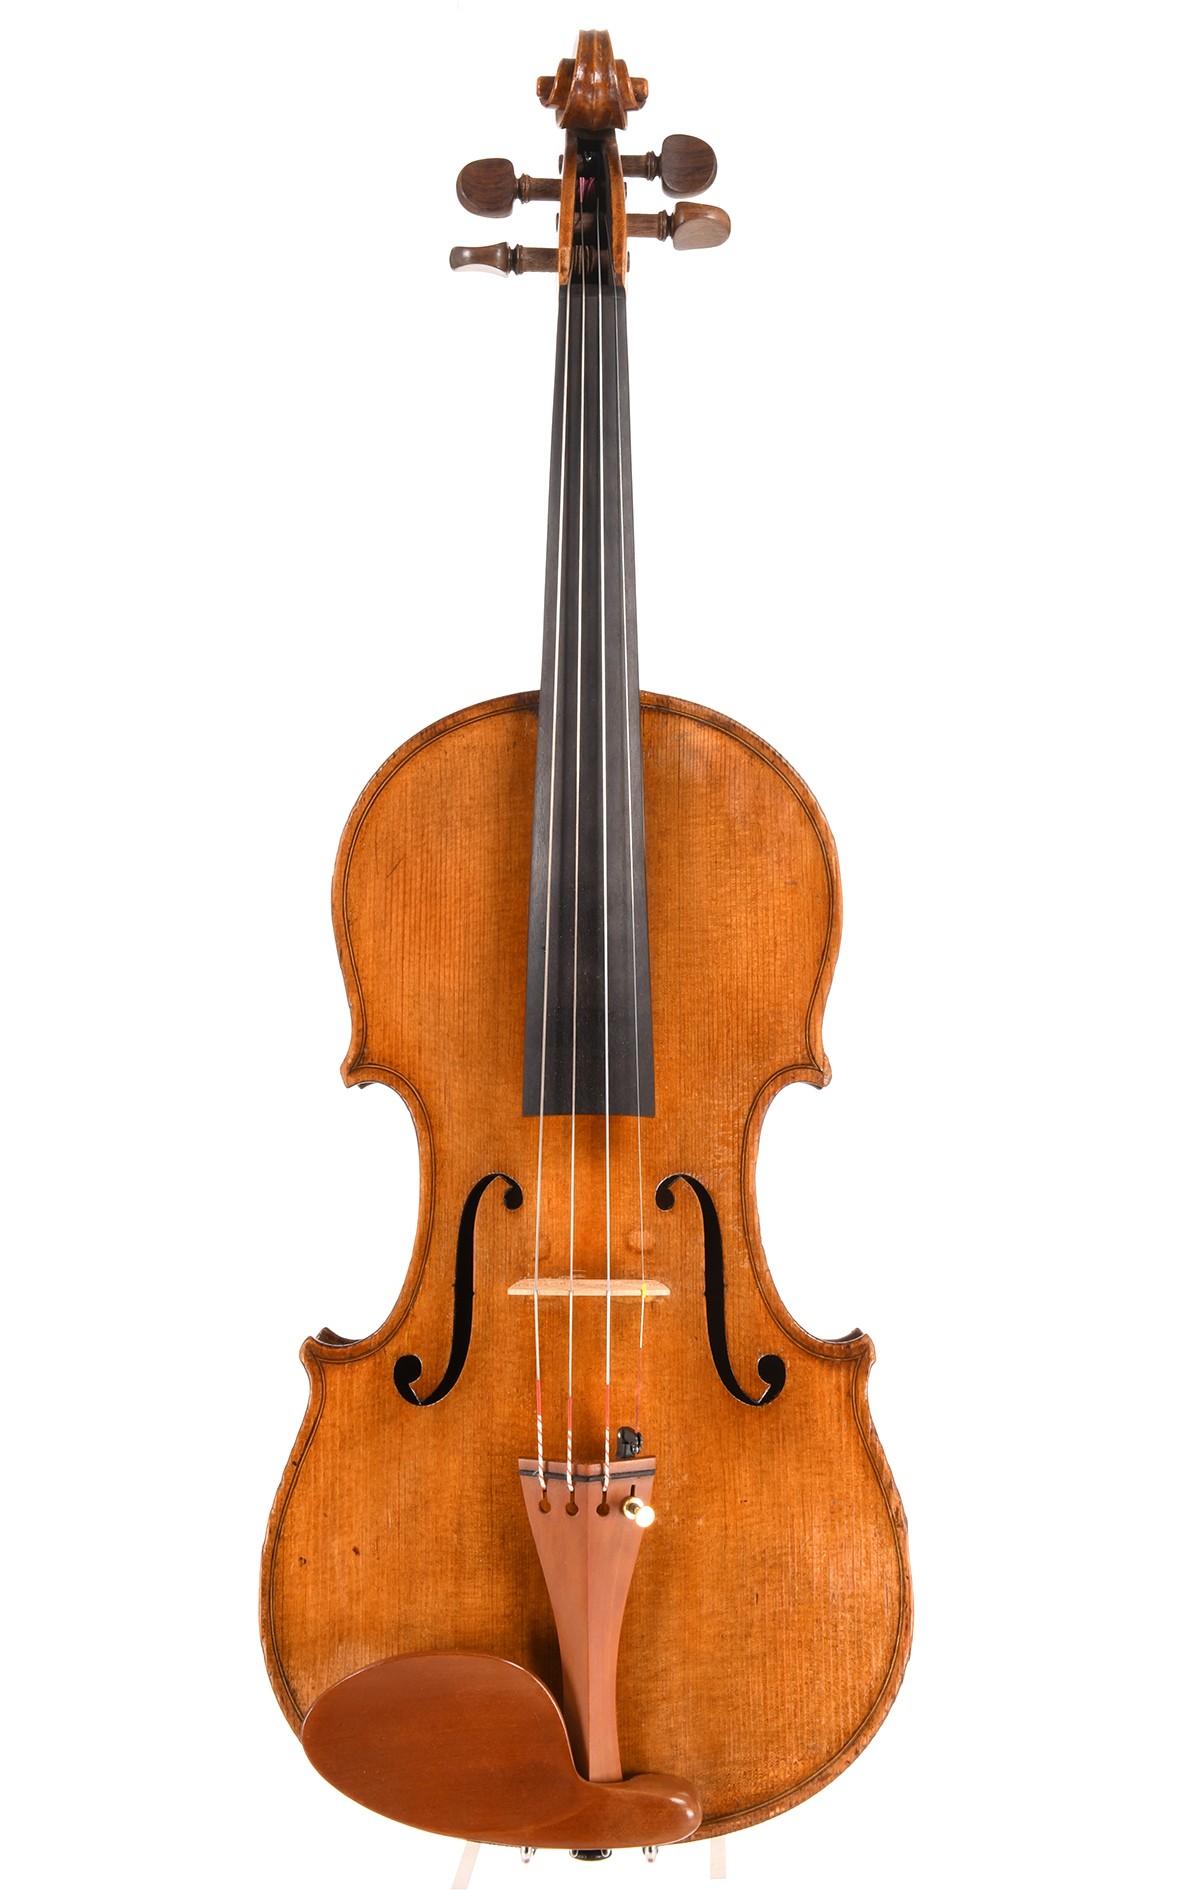 19th century English violin, c.1880